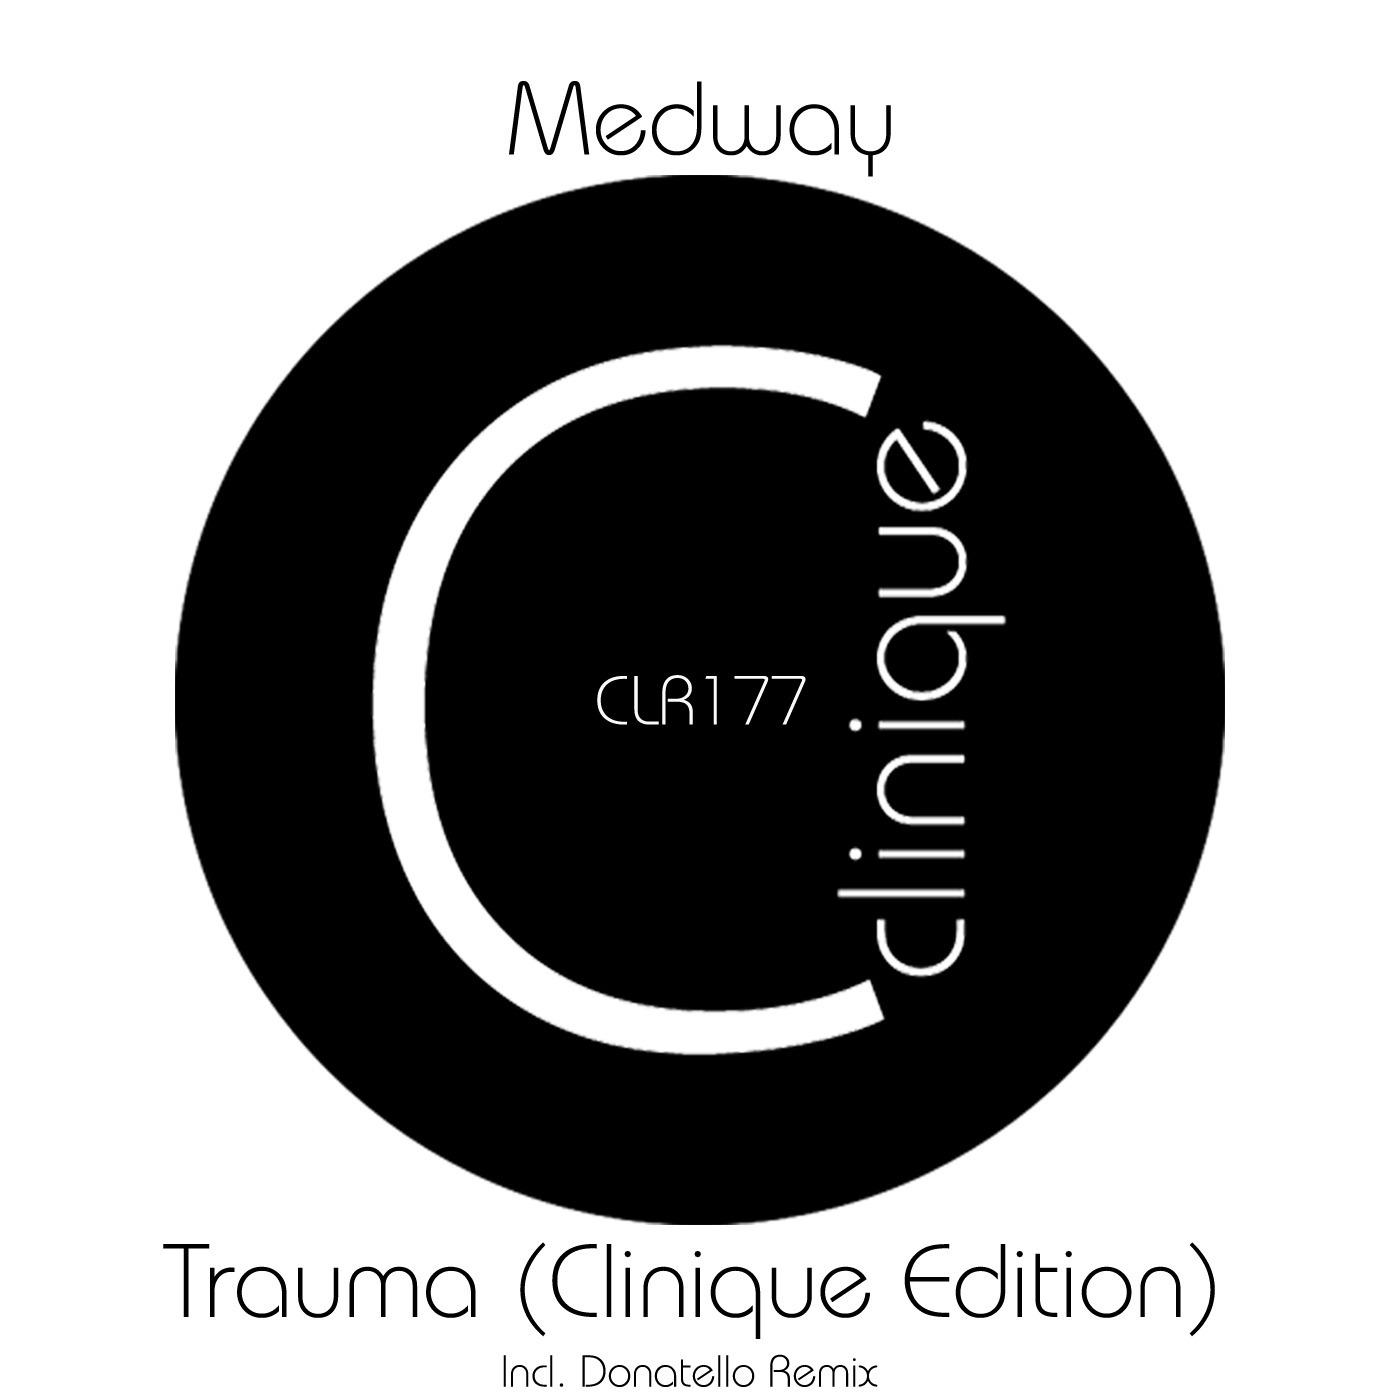 Medway - Trauma